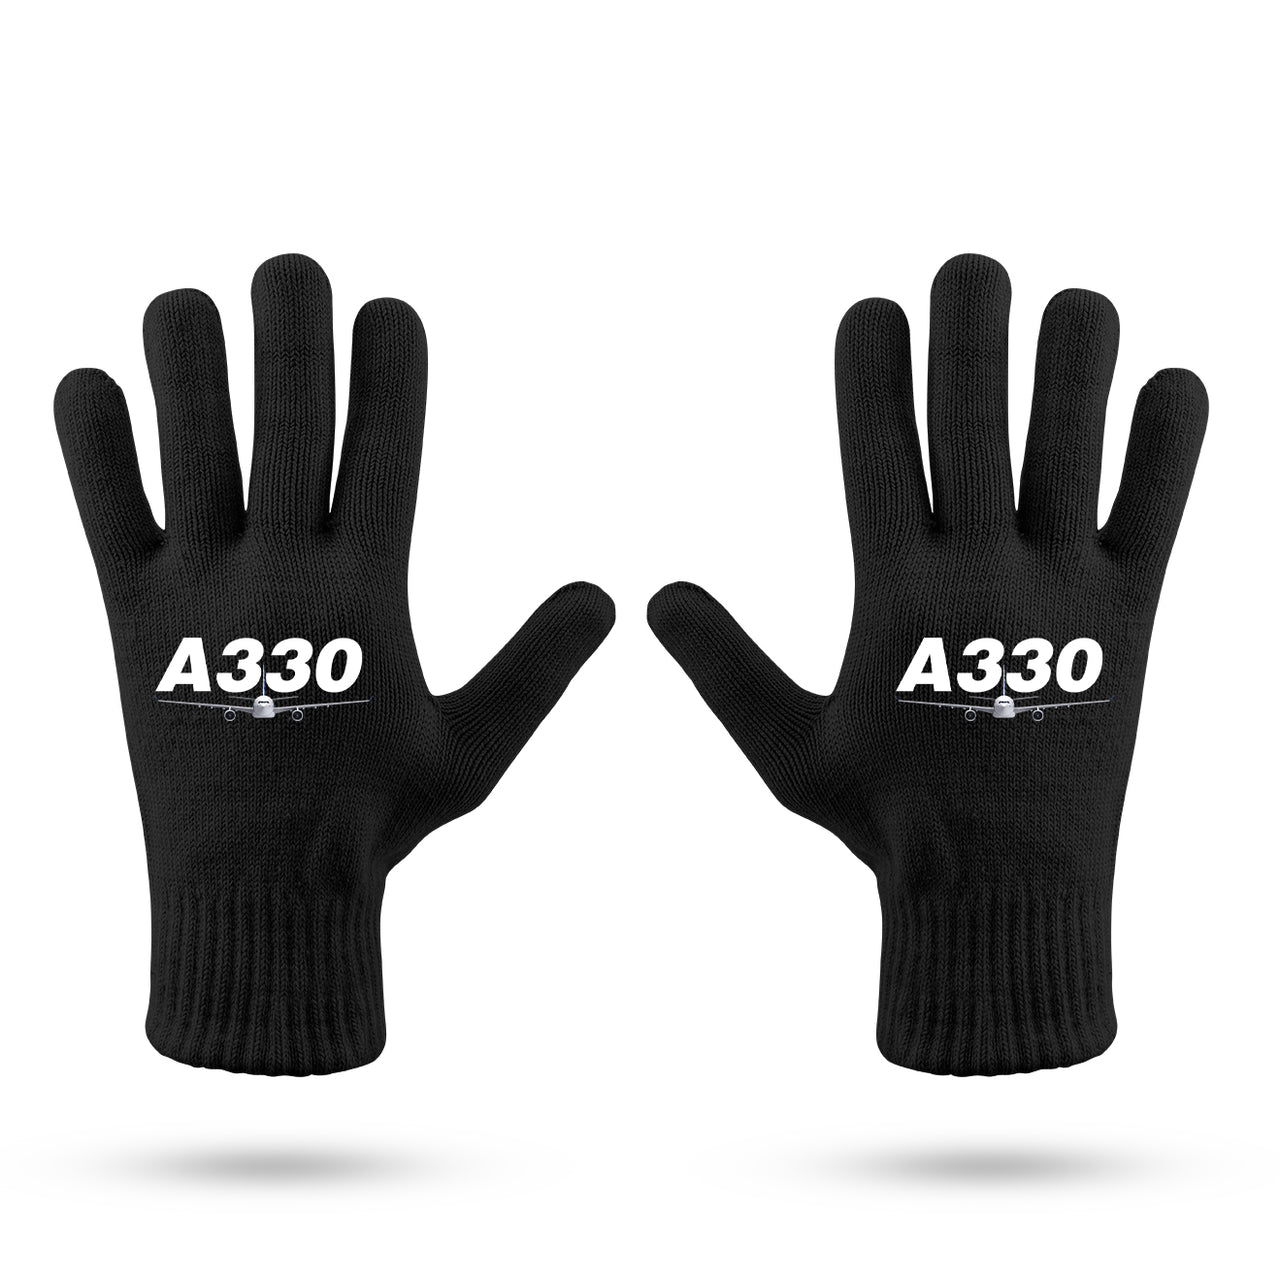 Super Airbus A330 Designed Gloves